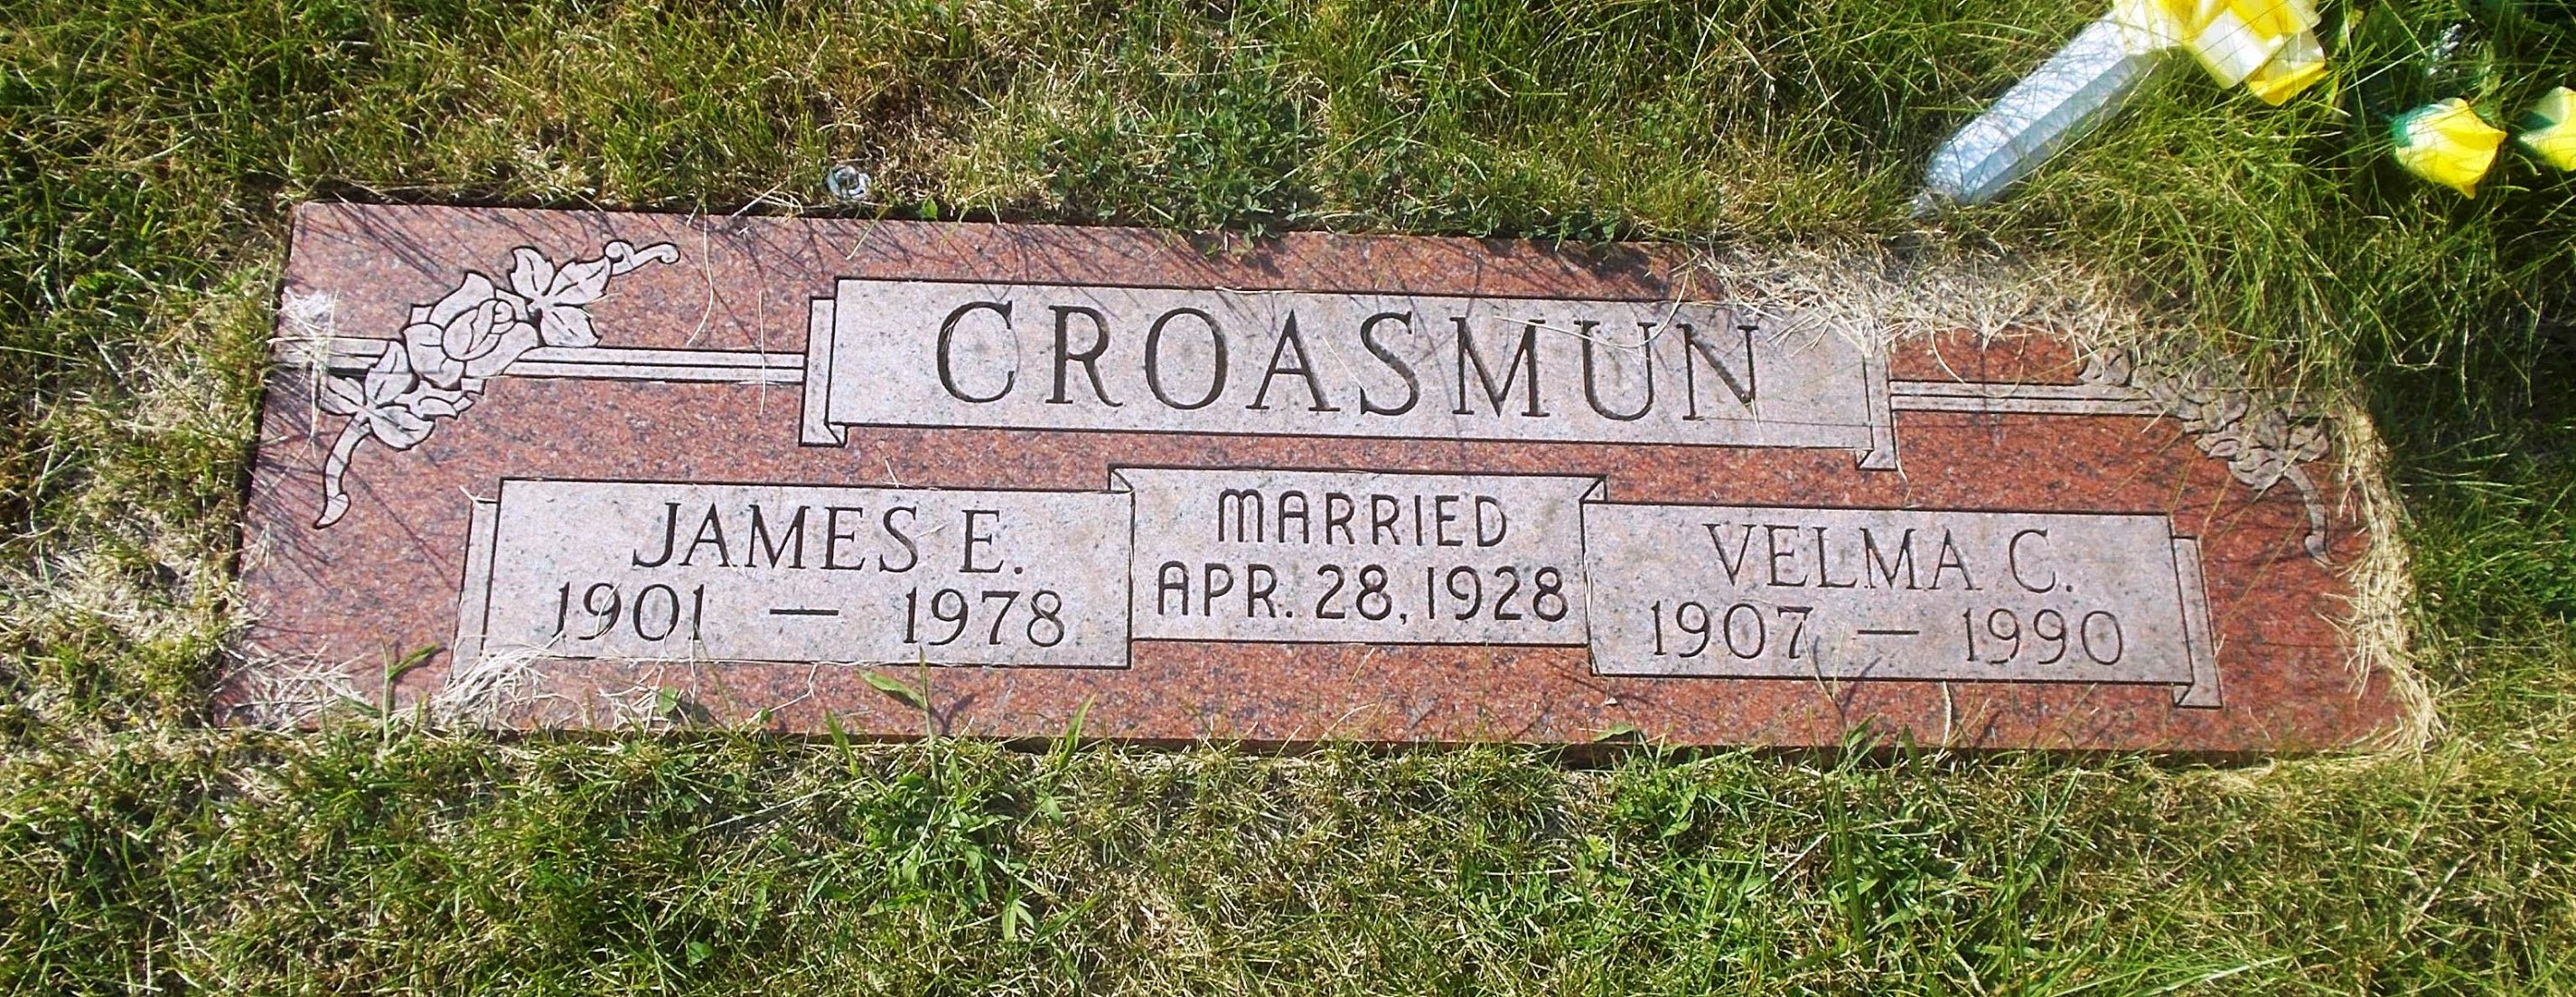 Velma C Croasmun